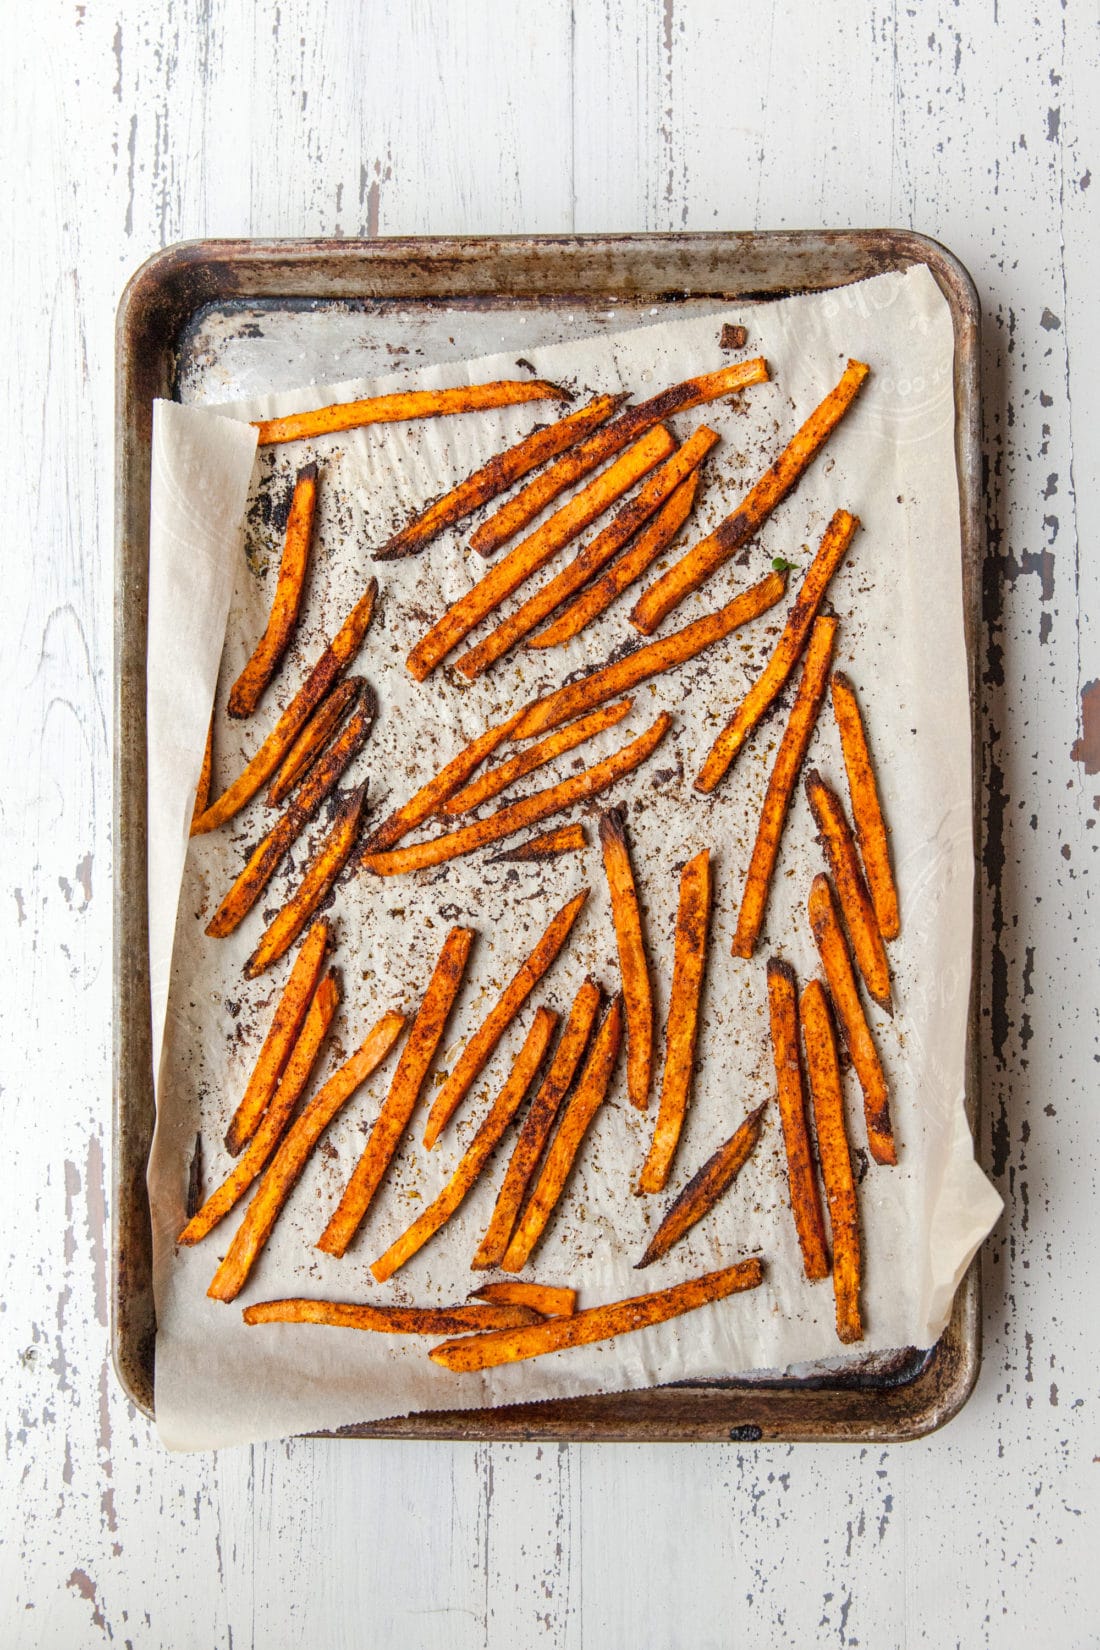 Crispy Baked Sweet Potato Fries on a sheet pan